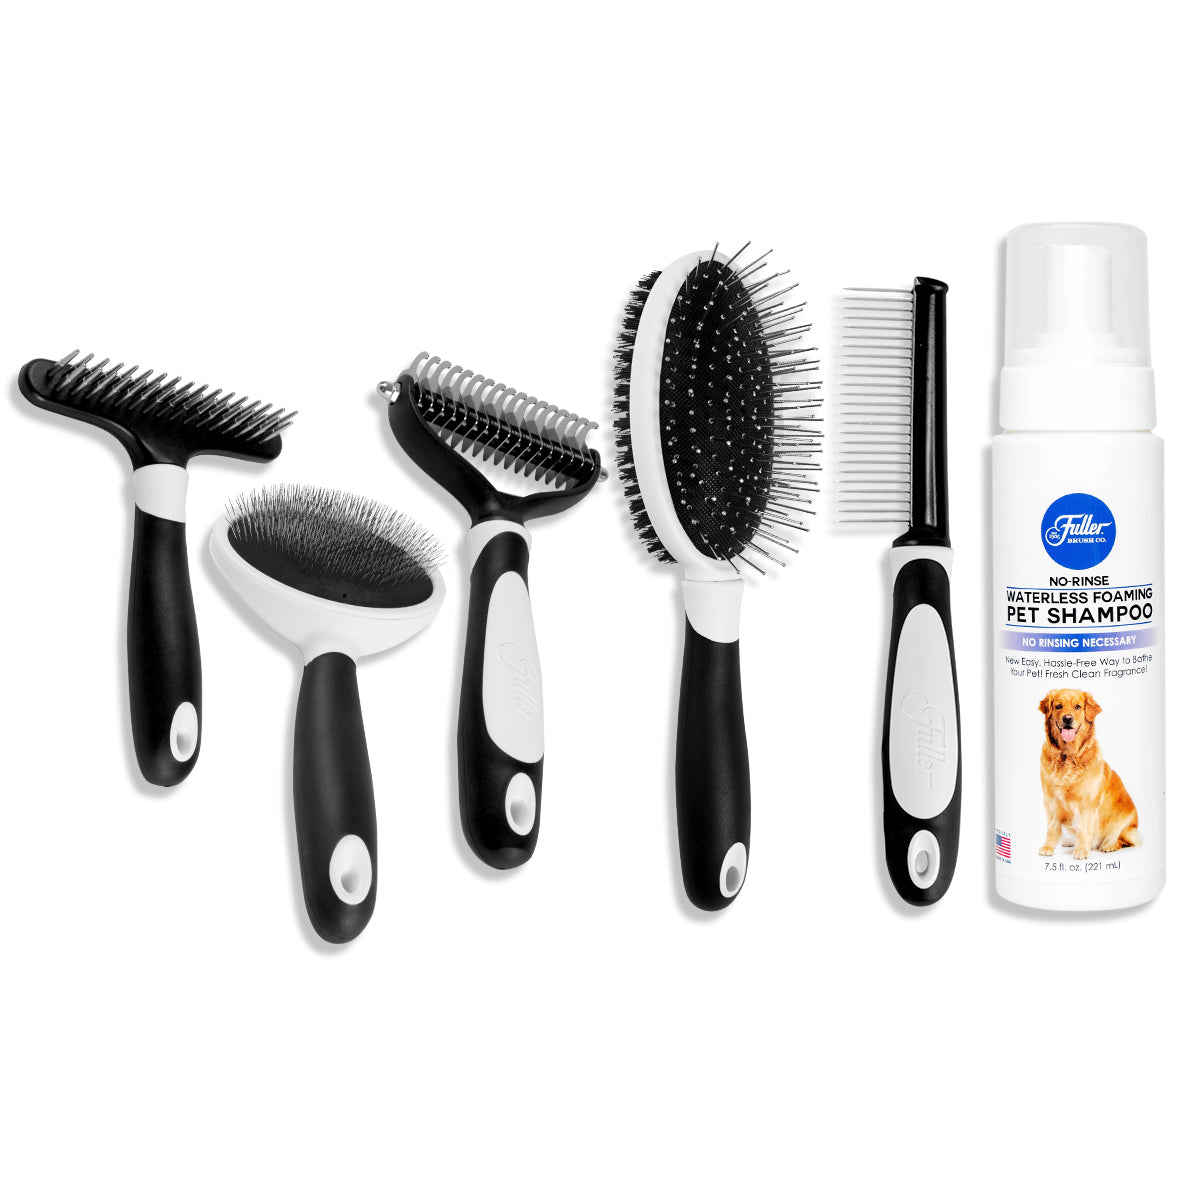 Pet Care Complete Bundle - Brushes+Shampoo